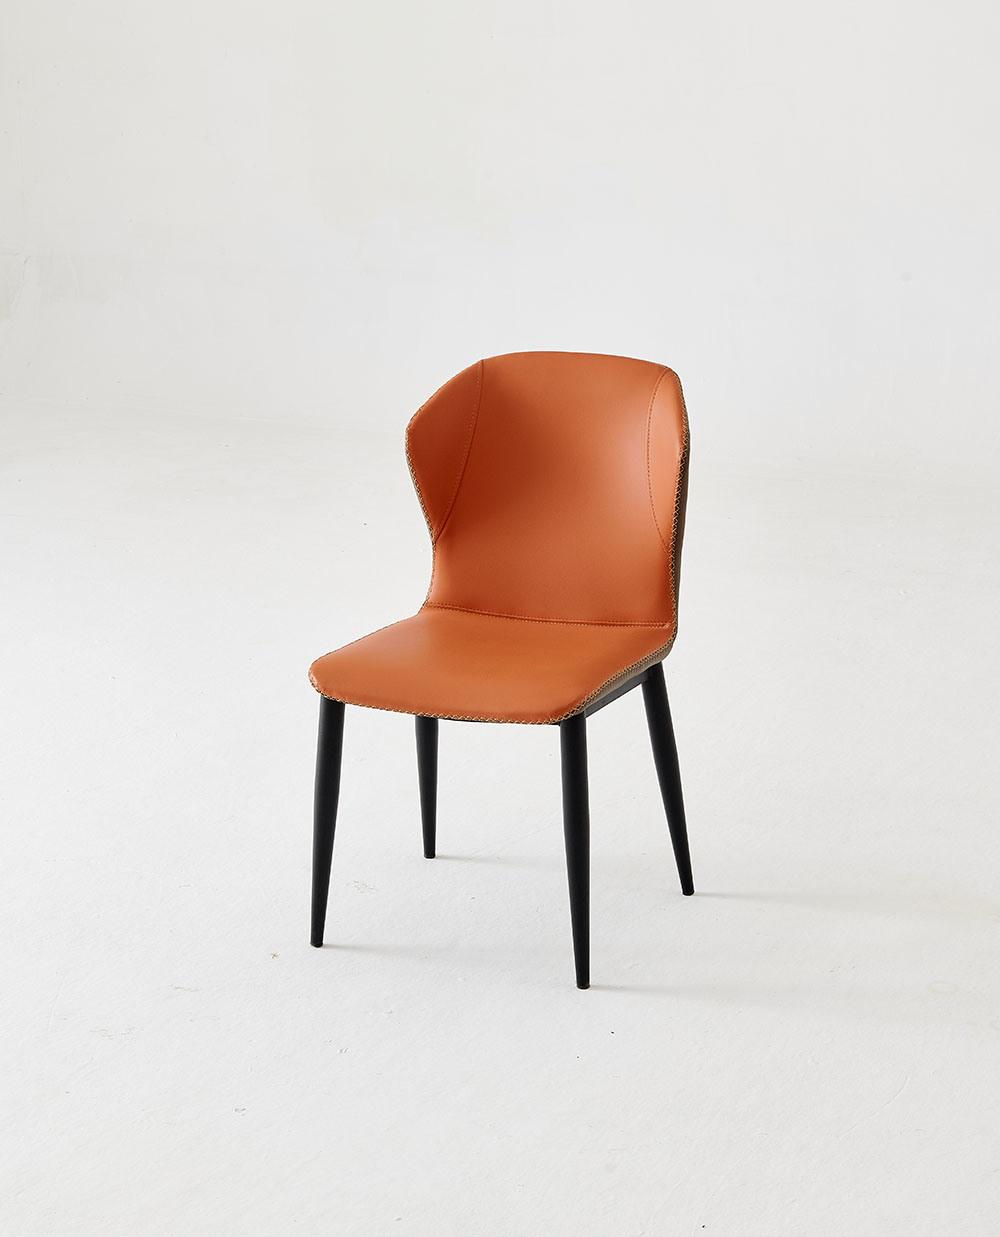 Classic New Design Furniture Orange Office Chair